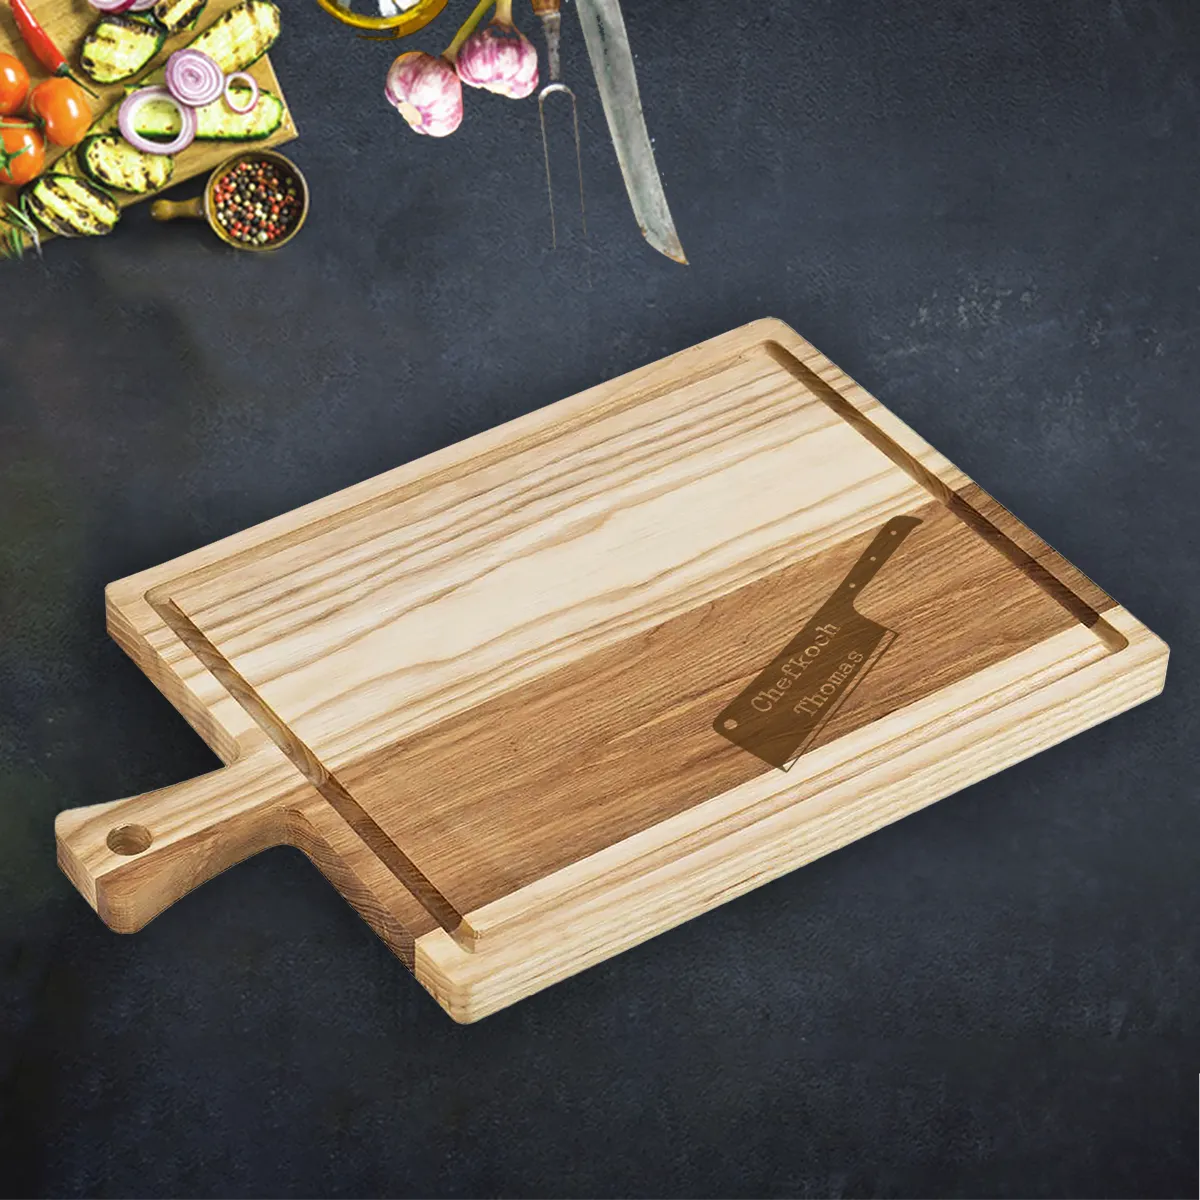 Holz Schneidebrett mit Gravur - Motiv Chefkoch Messer